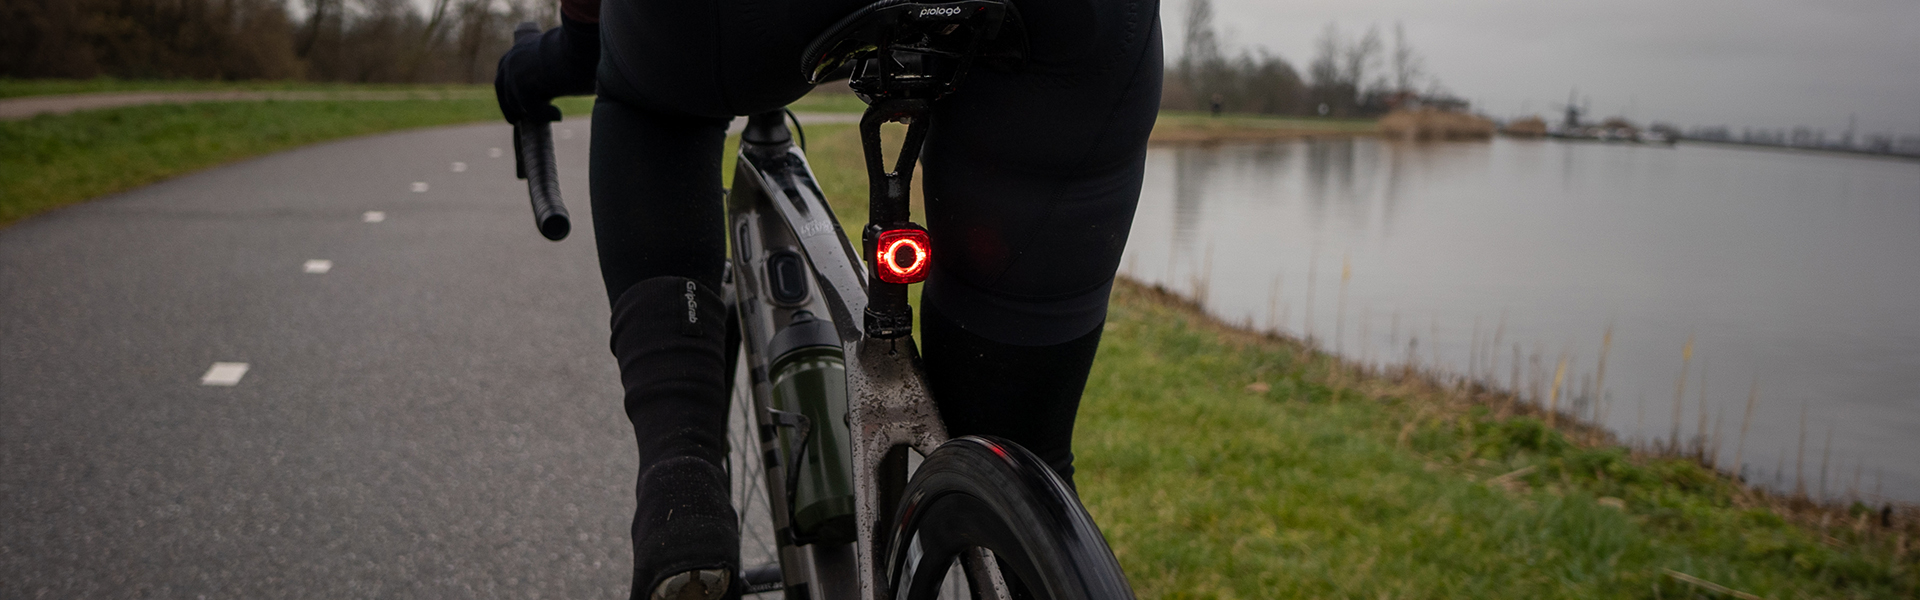 Sate-lite 40 LUX USB rechargeable bike light StVZO eletric bike front light OSRAM LED waterproof